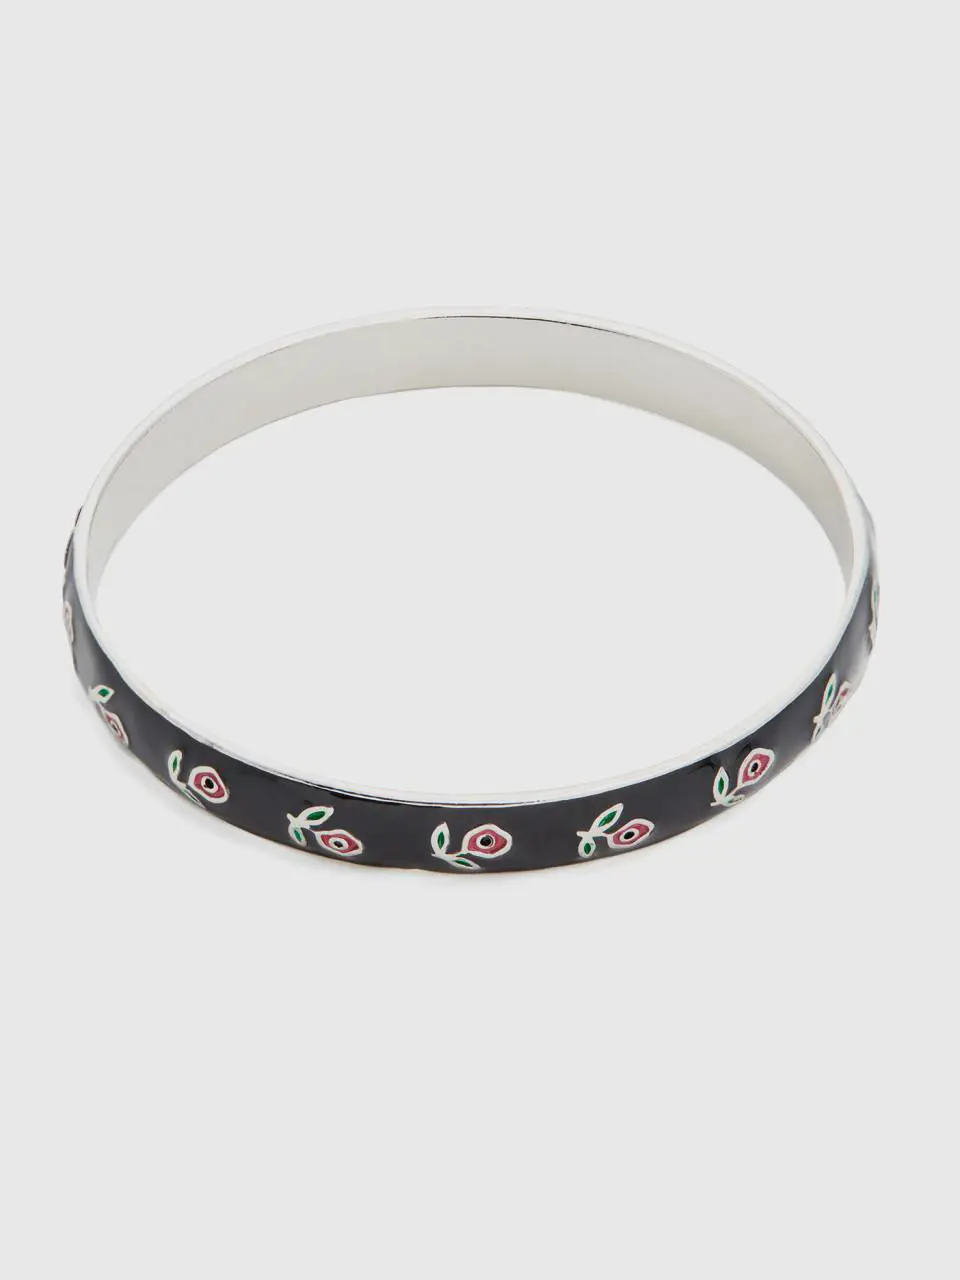 Benetton black bangle bracelet with pink flowers. 1